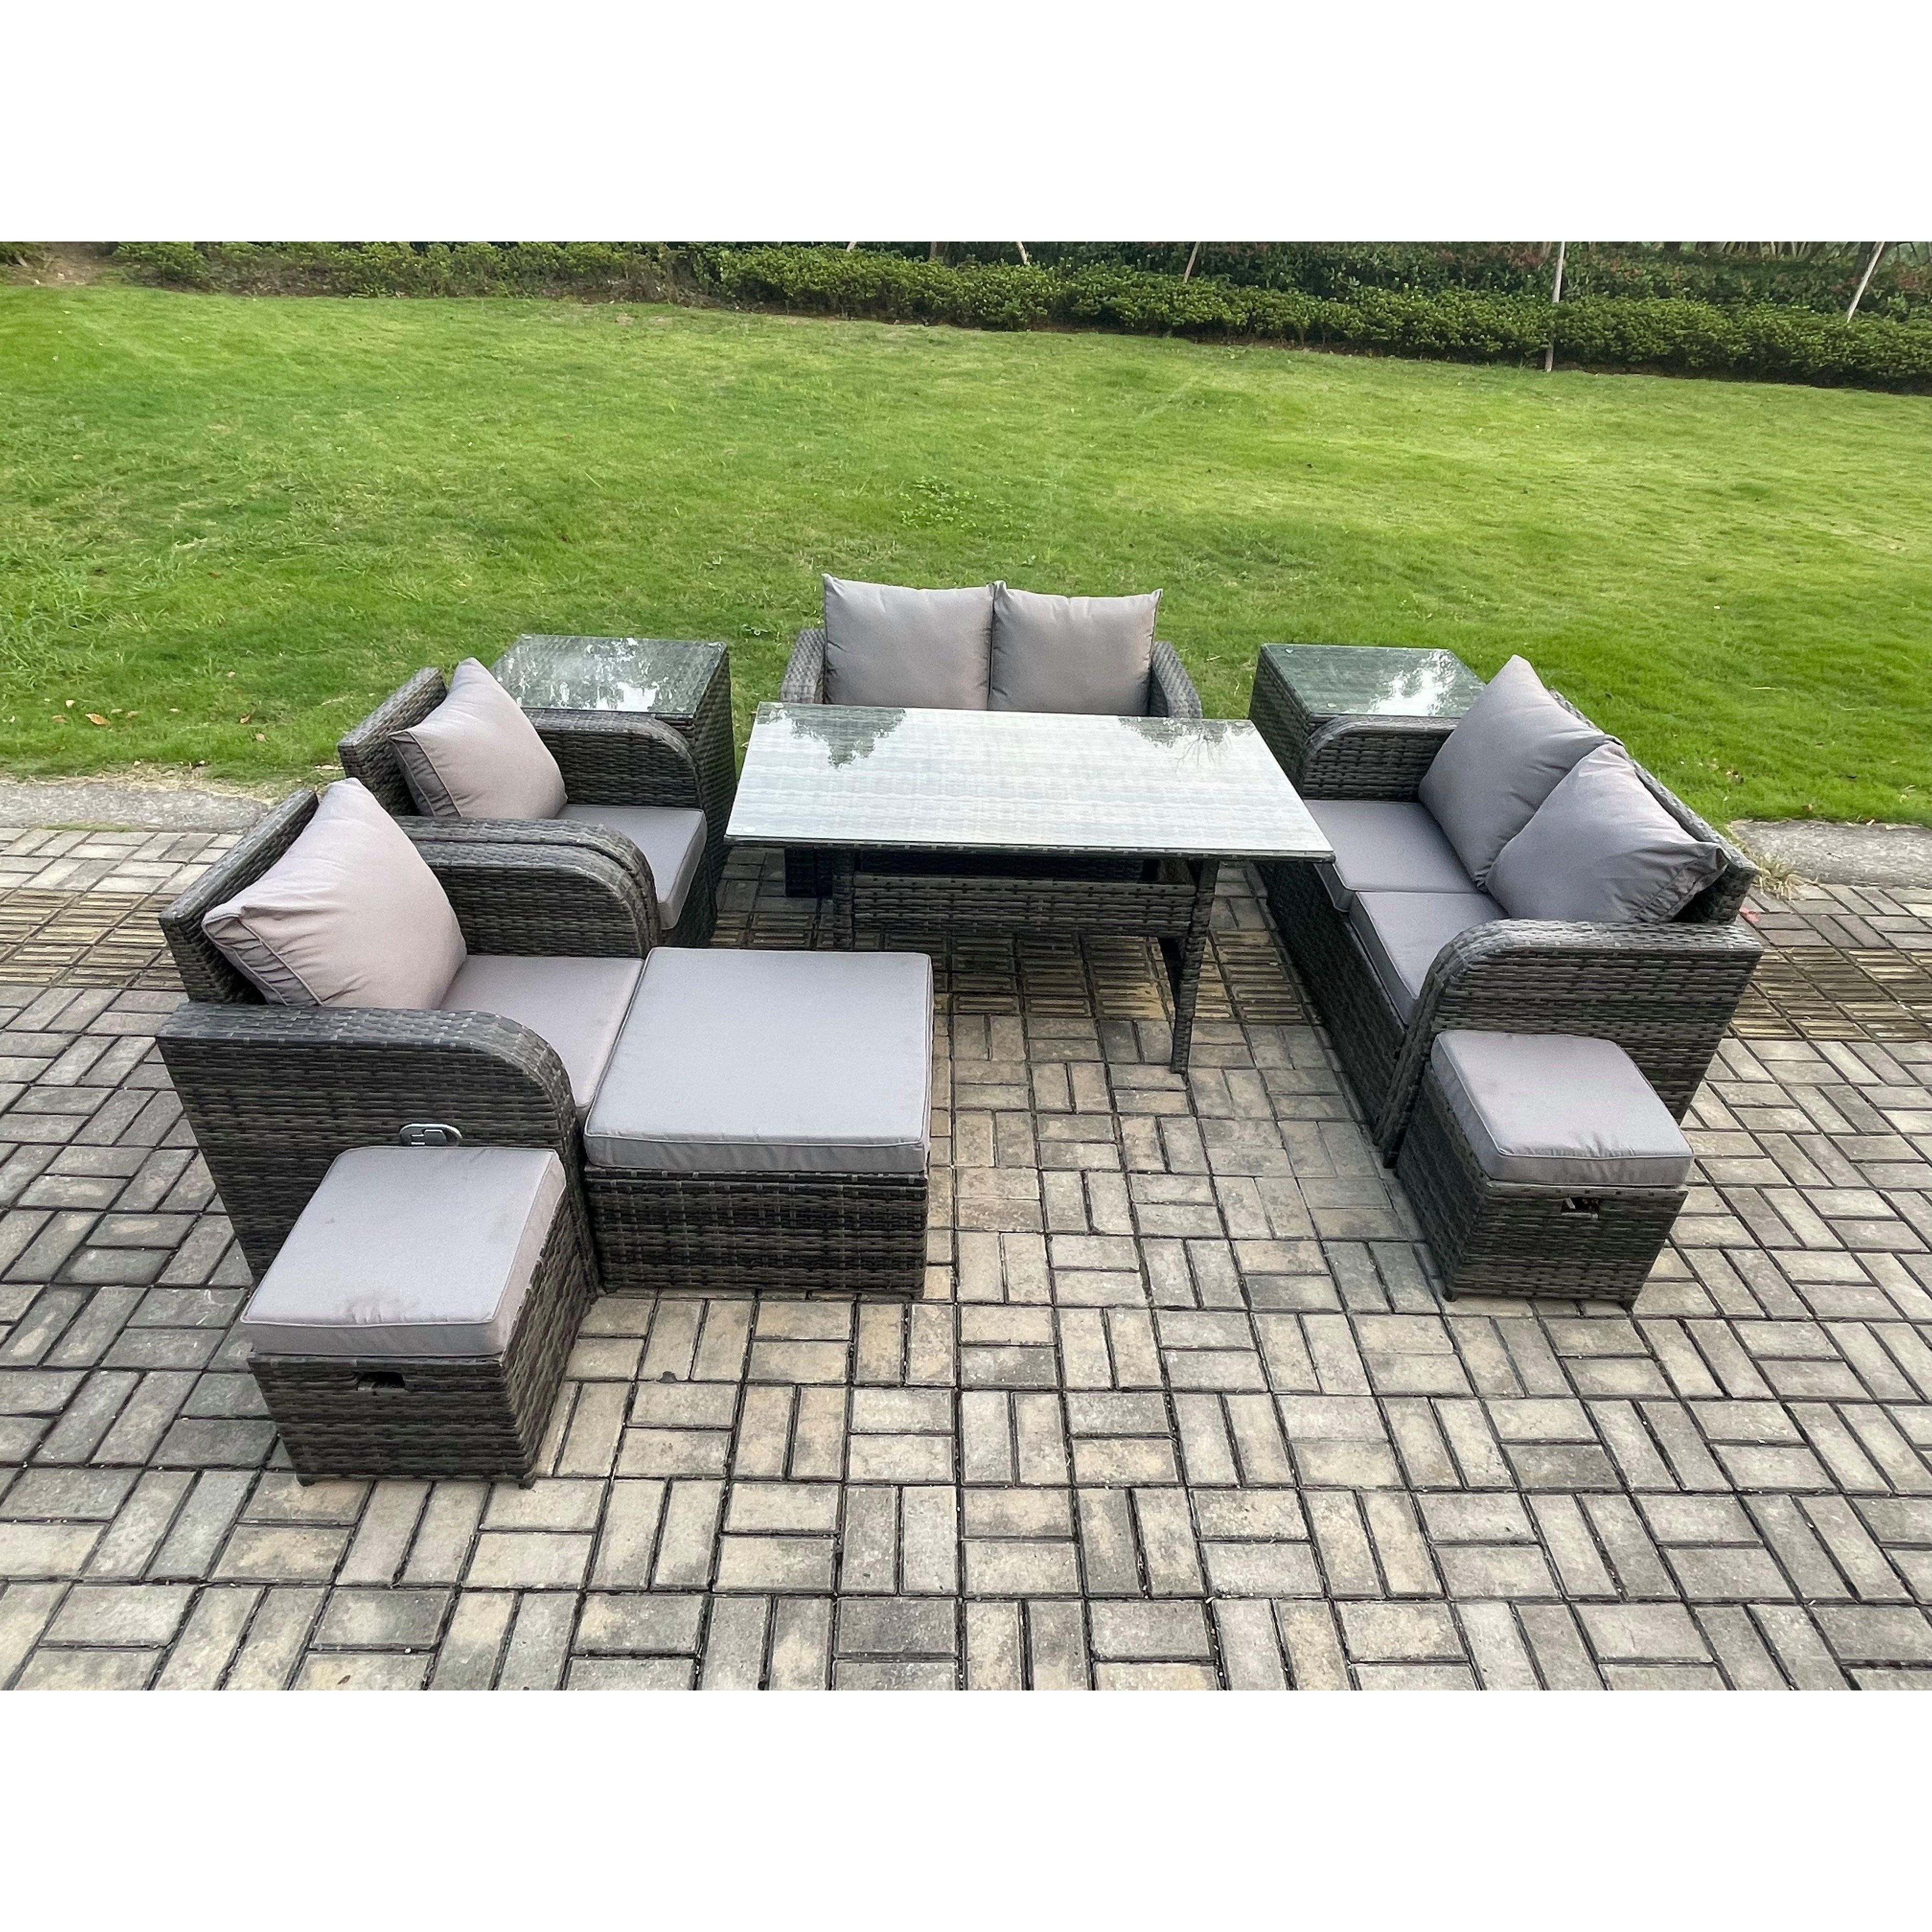 Outdoor Rattan Garden Furniture 10 piece Grey Patio Furniture Set 9 Seater Lounge Sofa Set with Rectangular Table - image 1